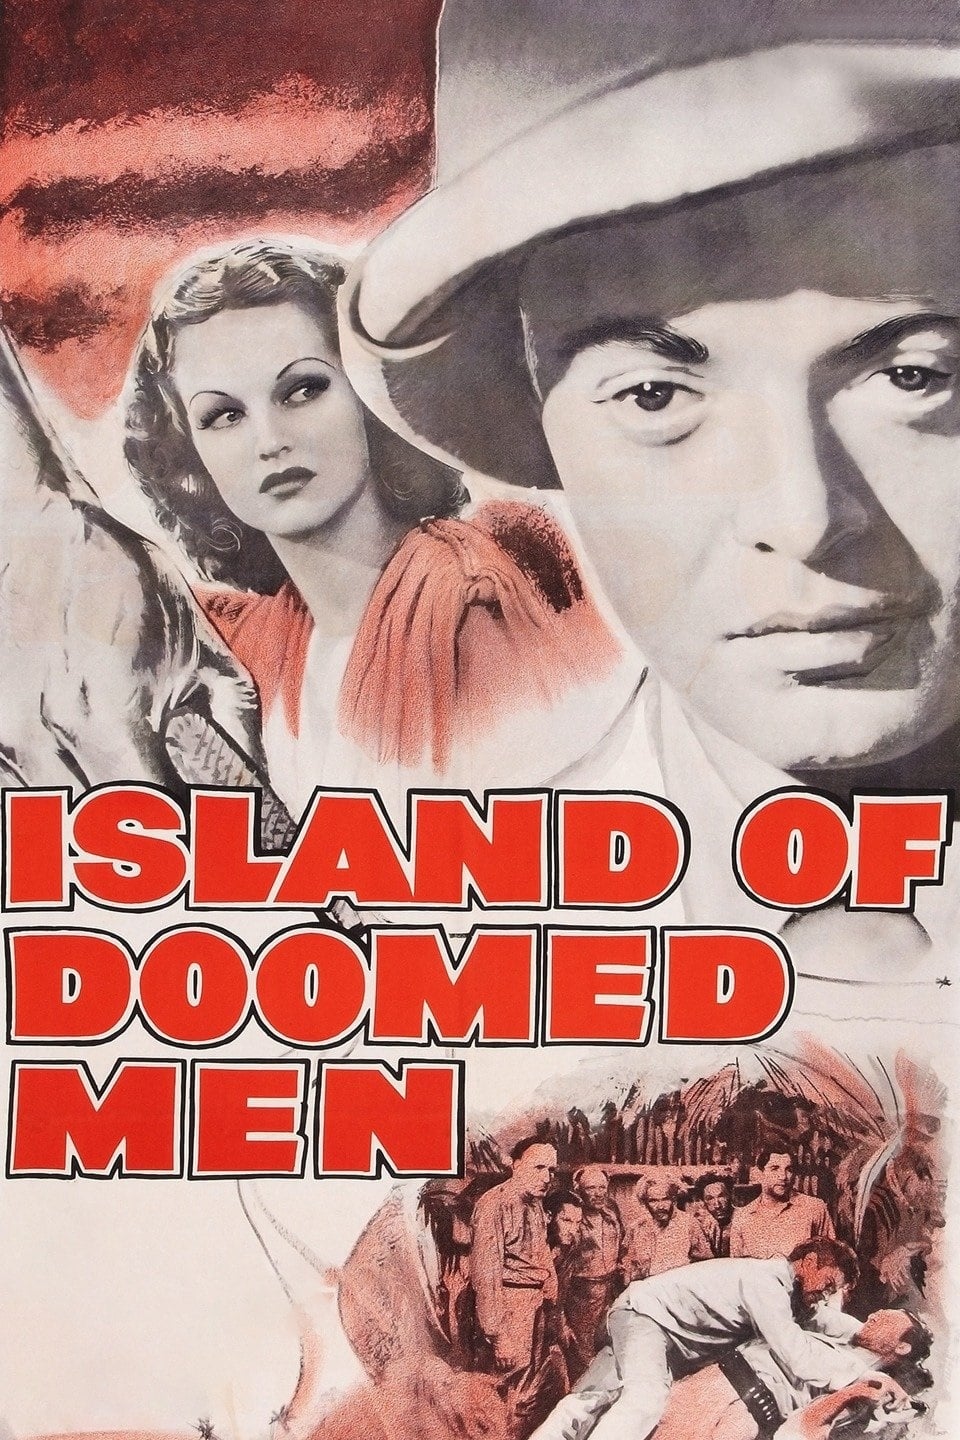 Island of Doomed Men (1940)